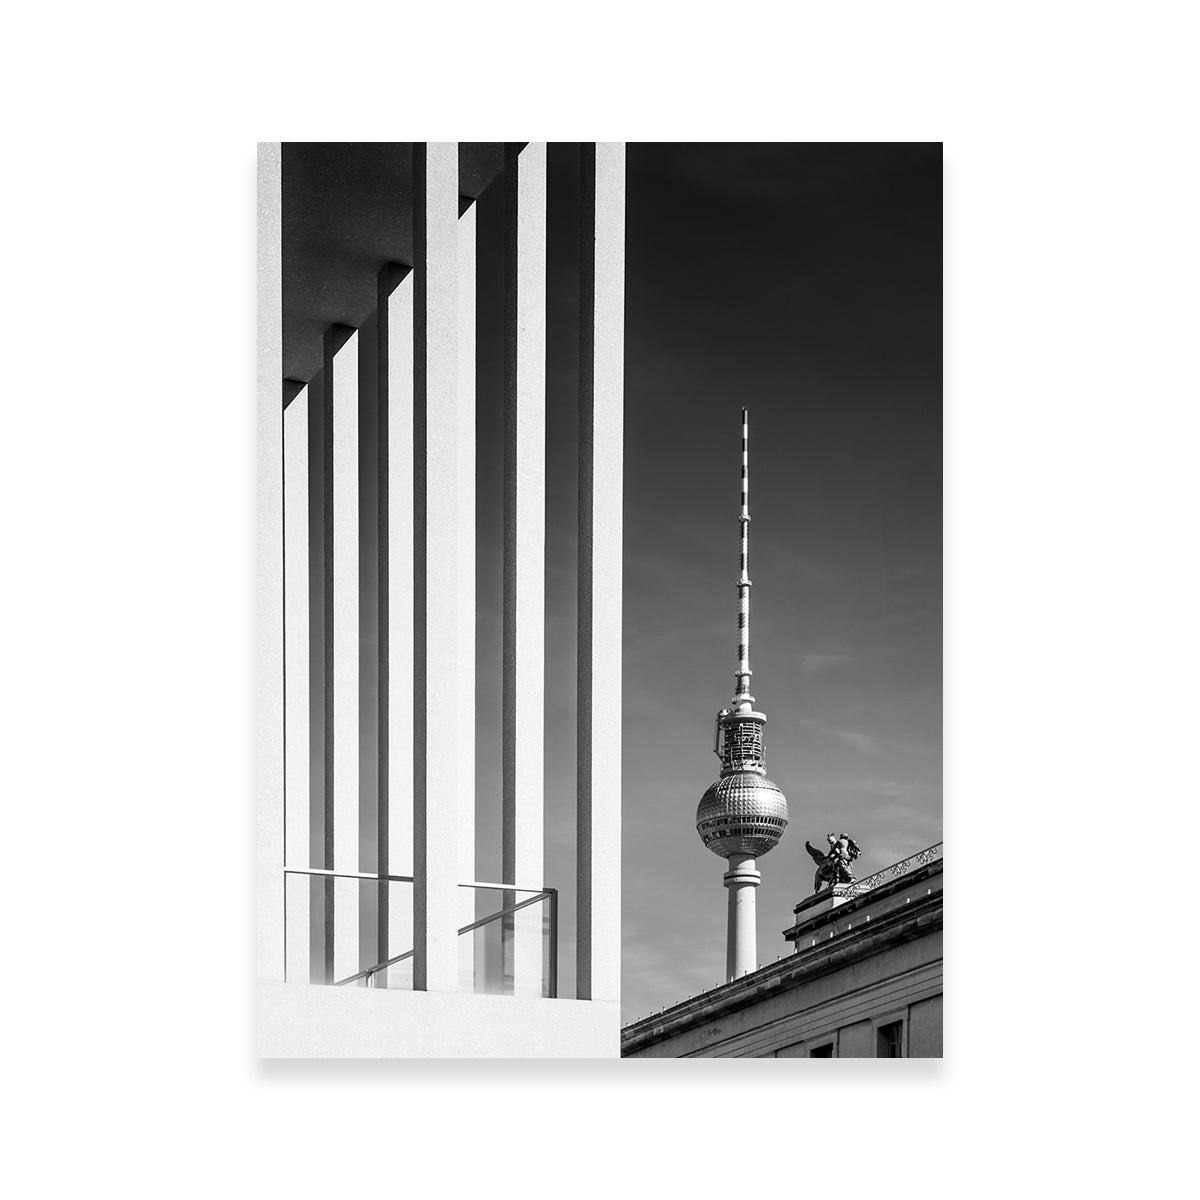 Berlin TV Tower & Museum Island